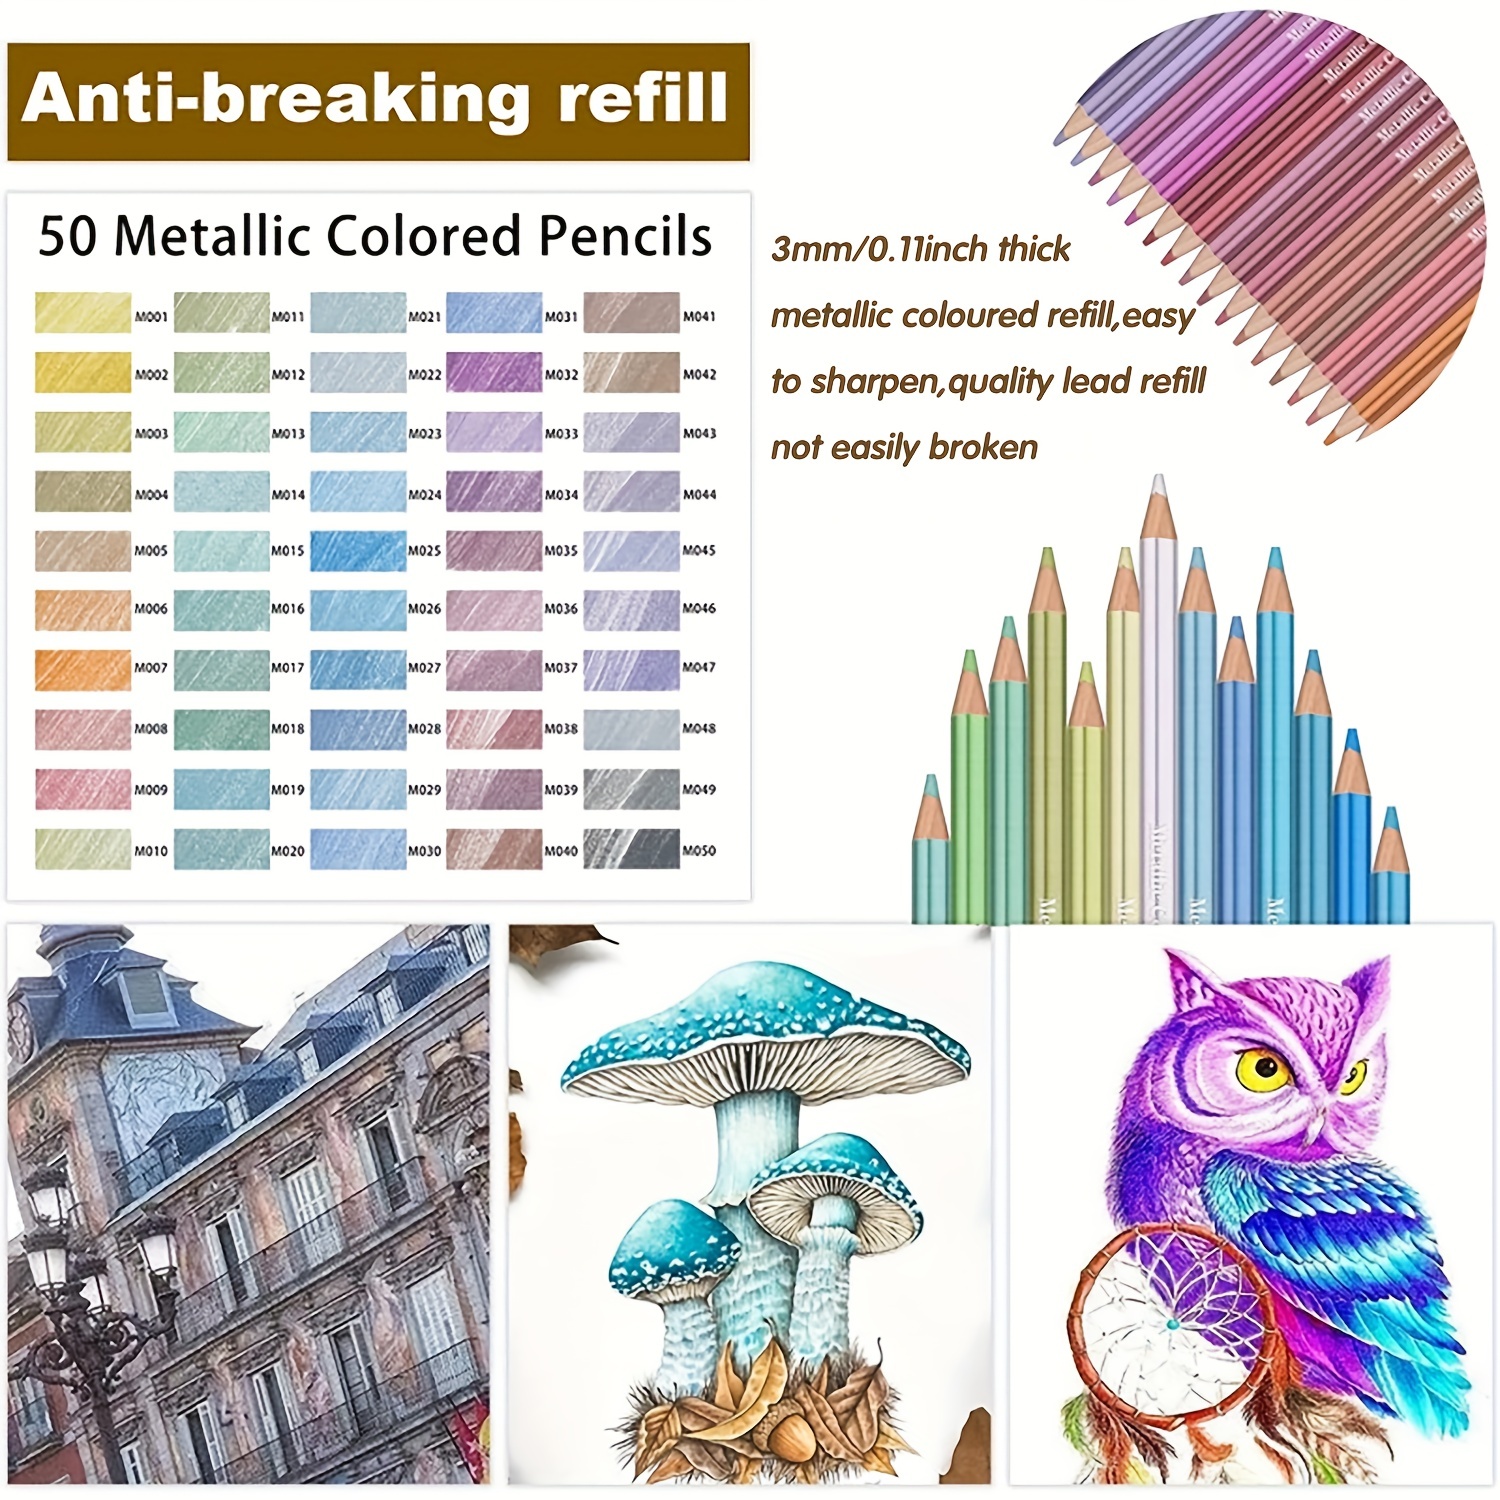 The Mega Deals Colored Pencils, 50 Colored Pencils. Colored Pencils for Adult Coloring. Coloring Pencils with Sharpener Ultimate Color Pencil Set.